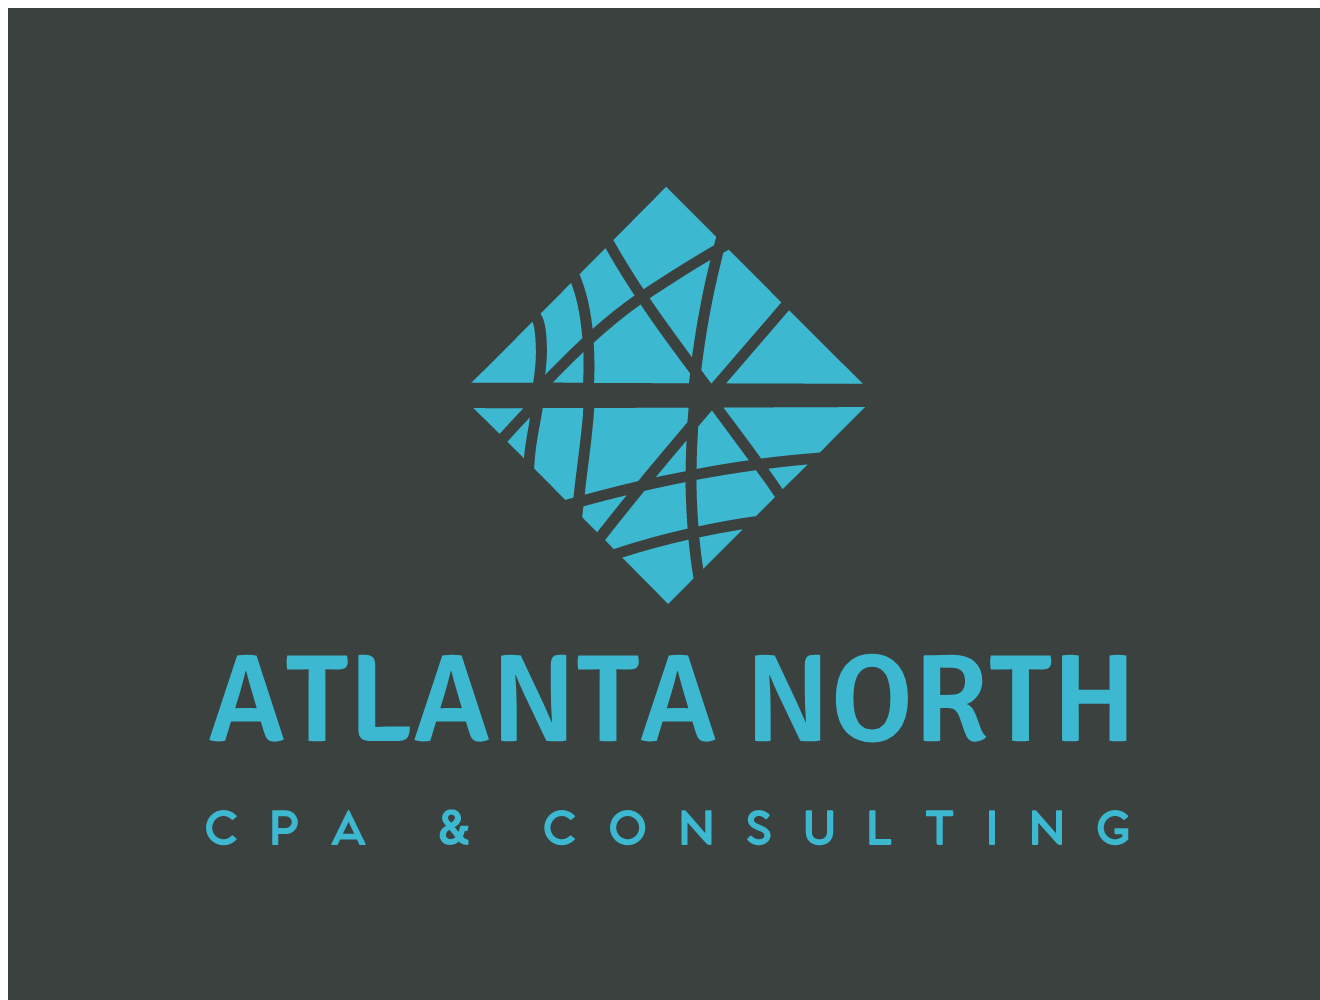 Atlanta North CPA & Consulting